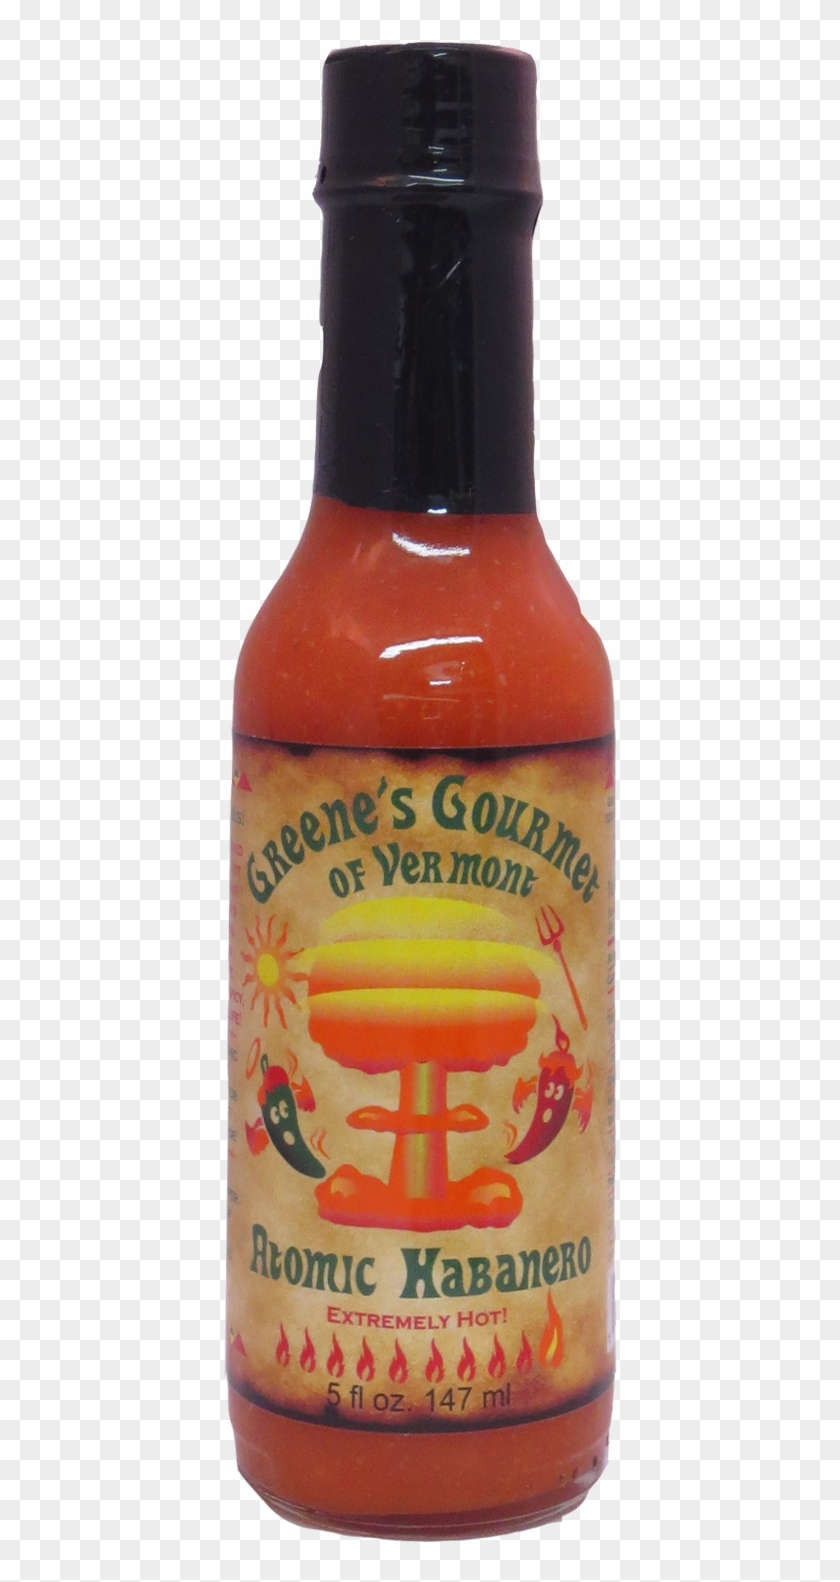 Greene's Gourmet Atomic Habanero Hot Sauce - Glass Bottle Clipart #2861137